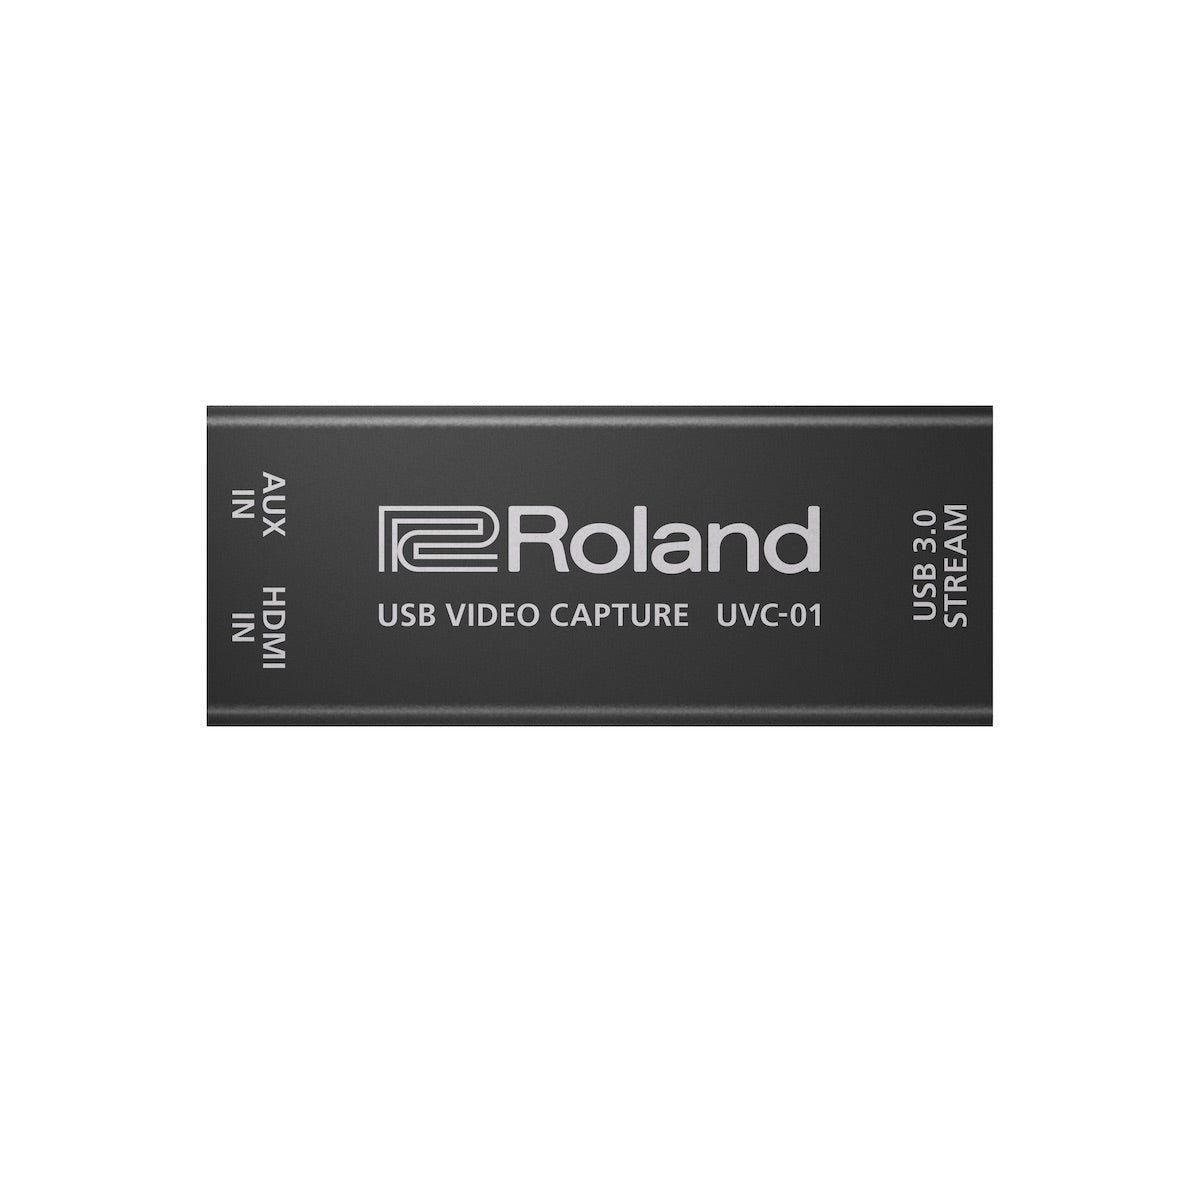 Roland UVC-01 - USB Video Capture/Encoder Device, top